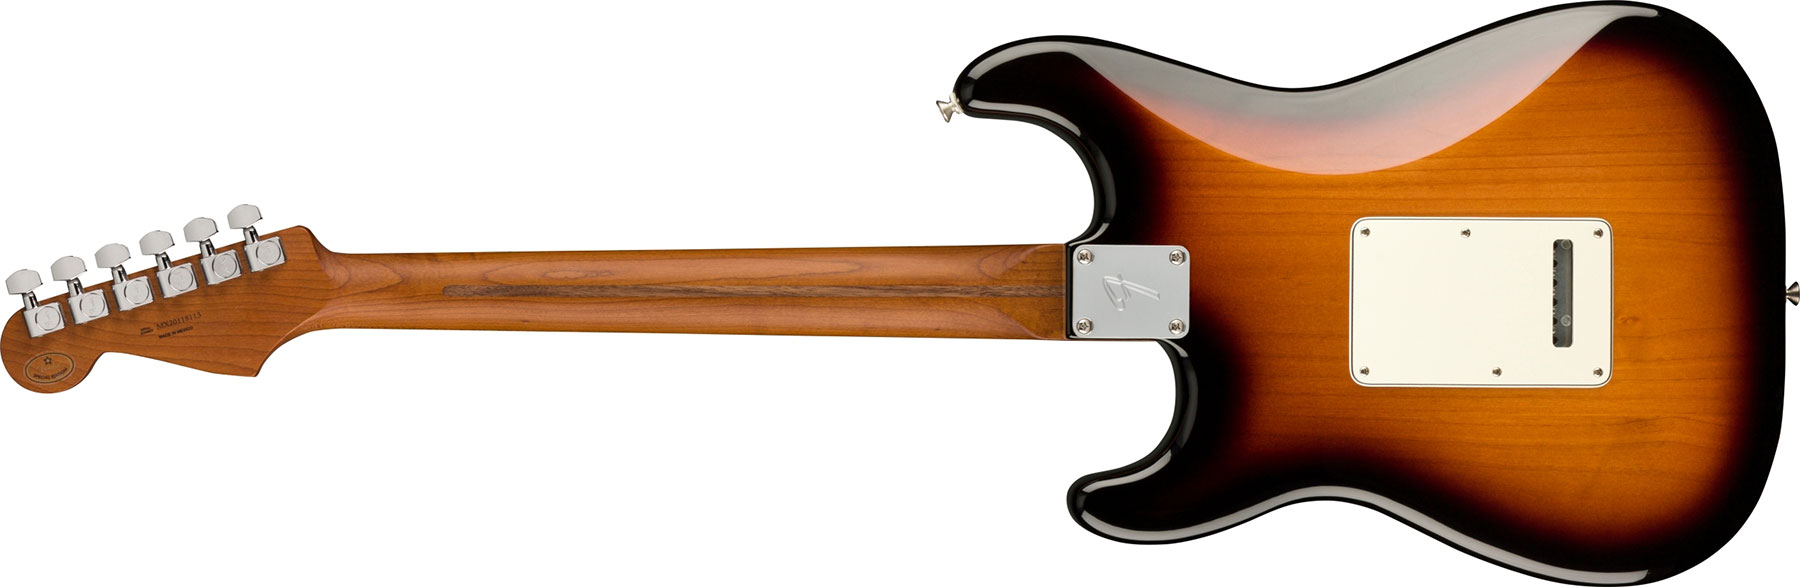 Fender Strat Player 1959 Texas Special Ltd Mex 3s Mn - 2-color Sunburst - Str shape electric guitar - Variation 1